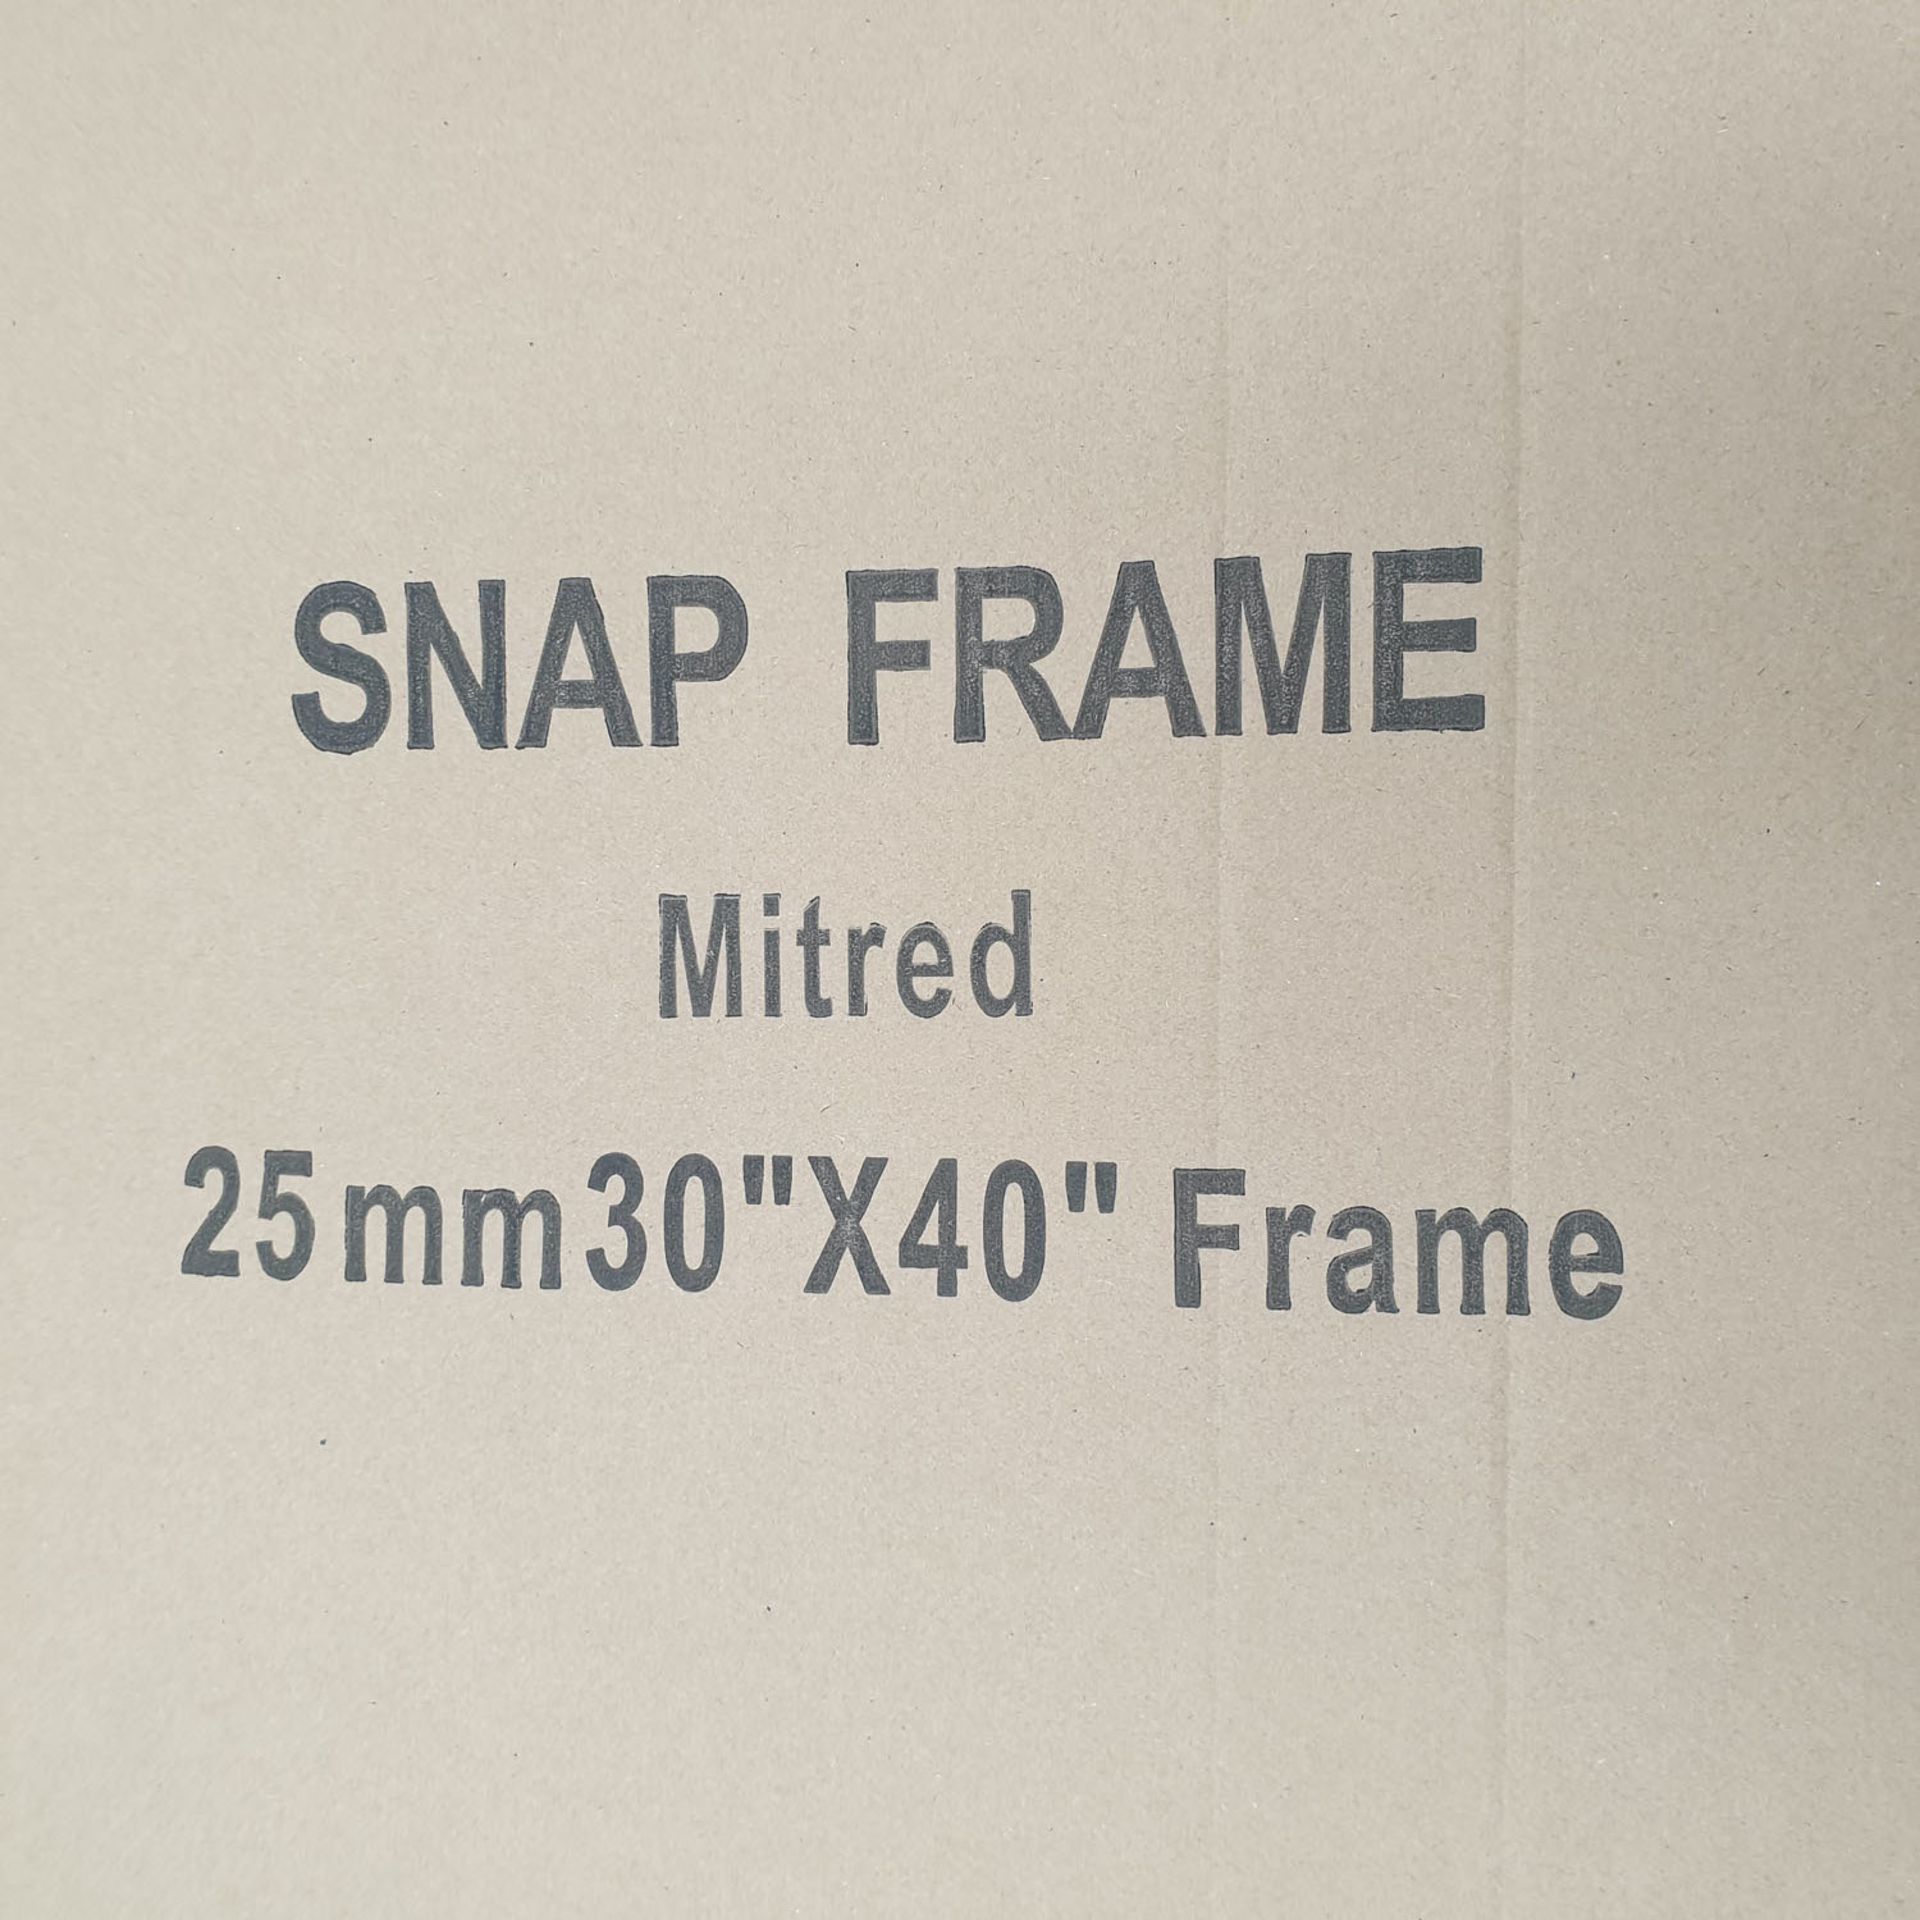 45 x Snap Frame Mitred 25mm 30" x 40" Frame - Image 4 of 6